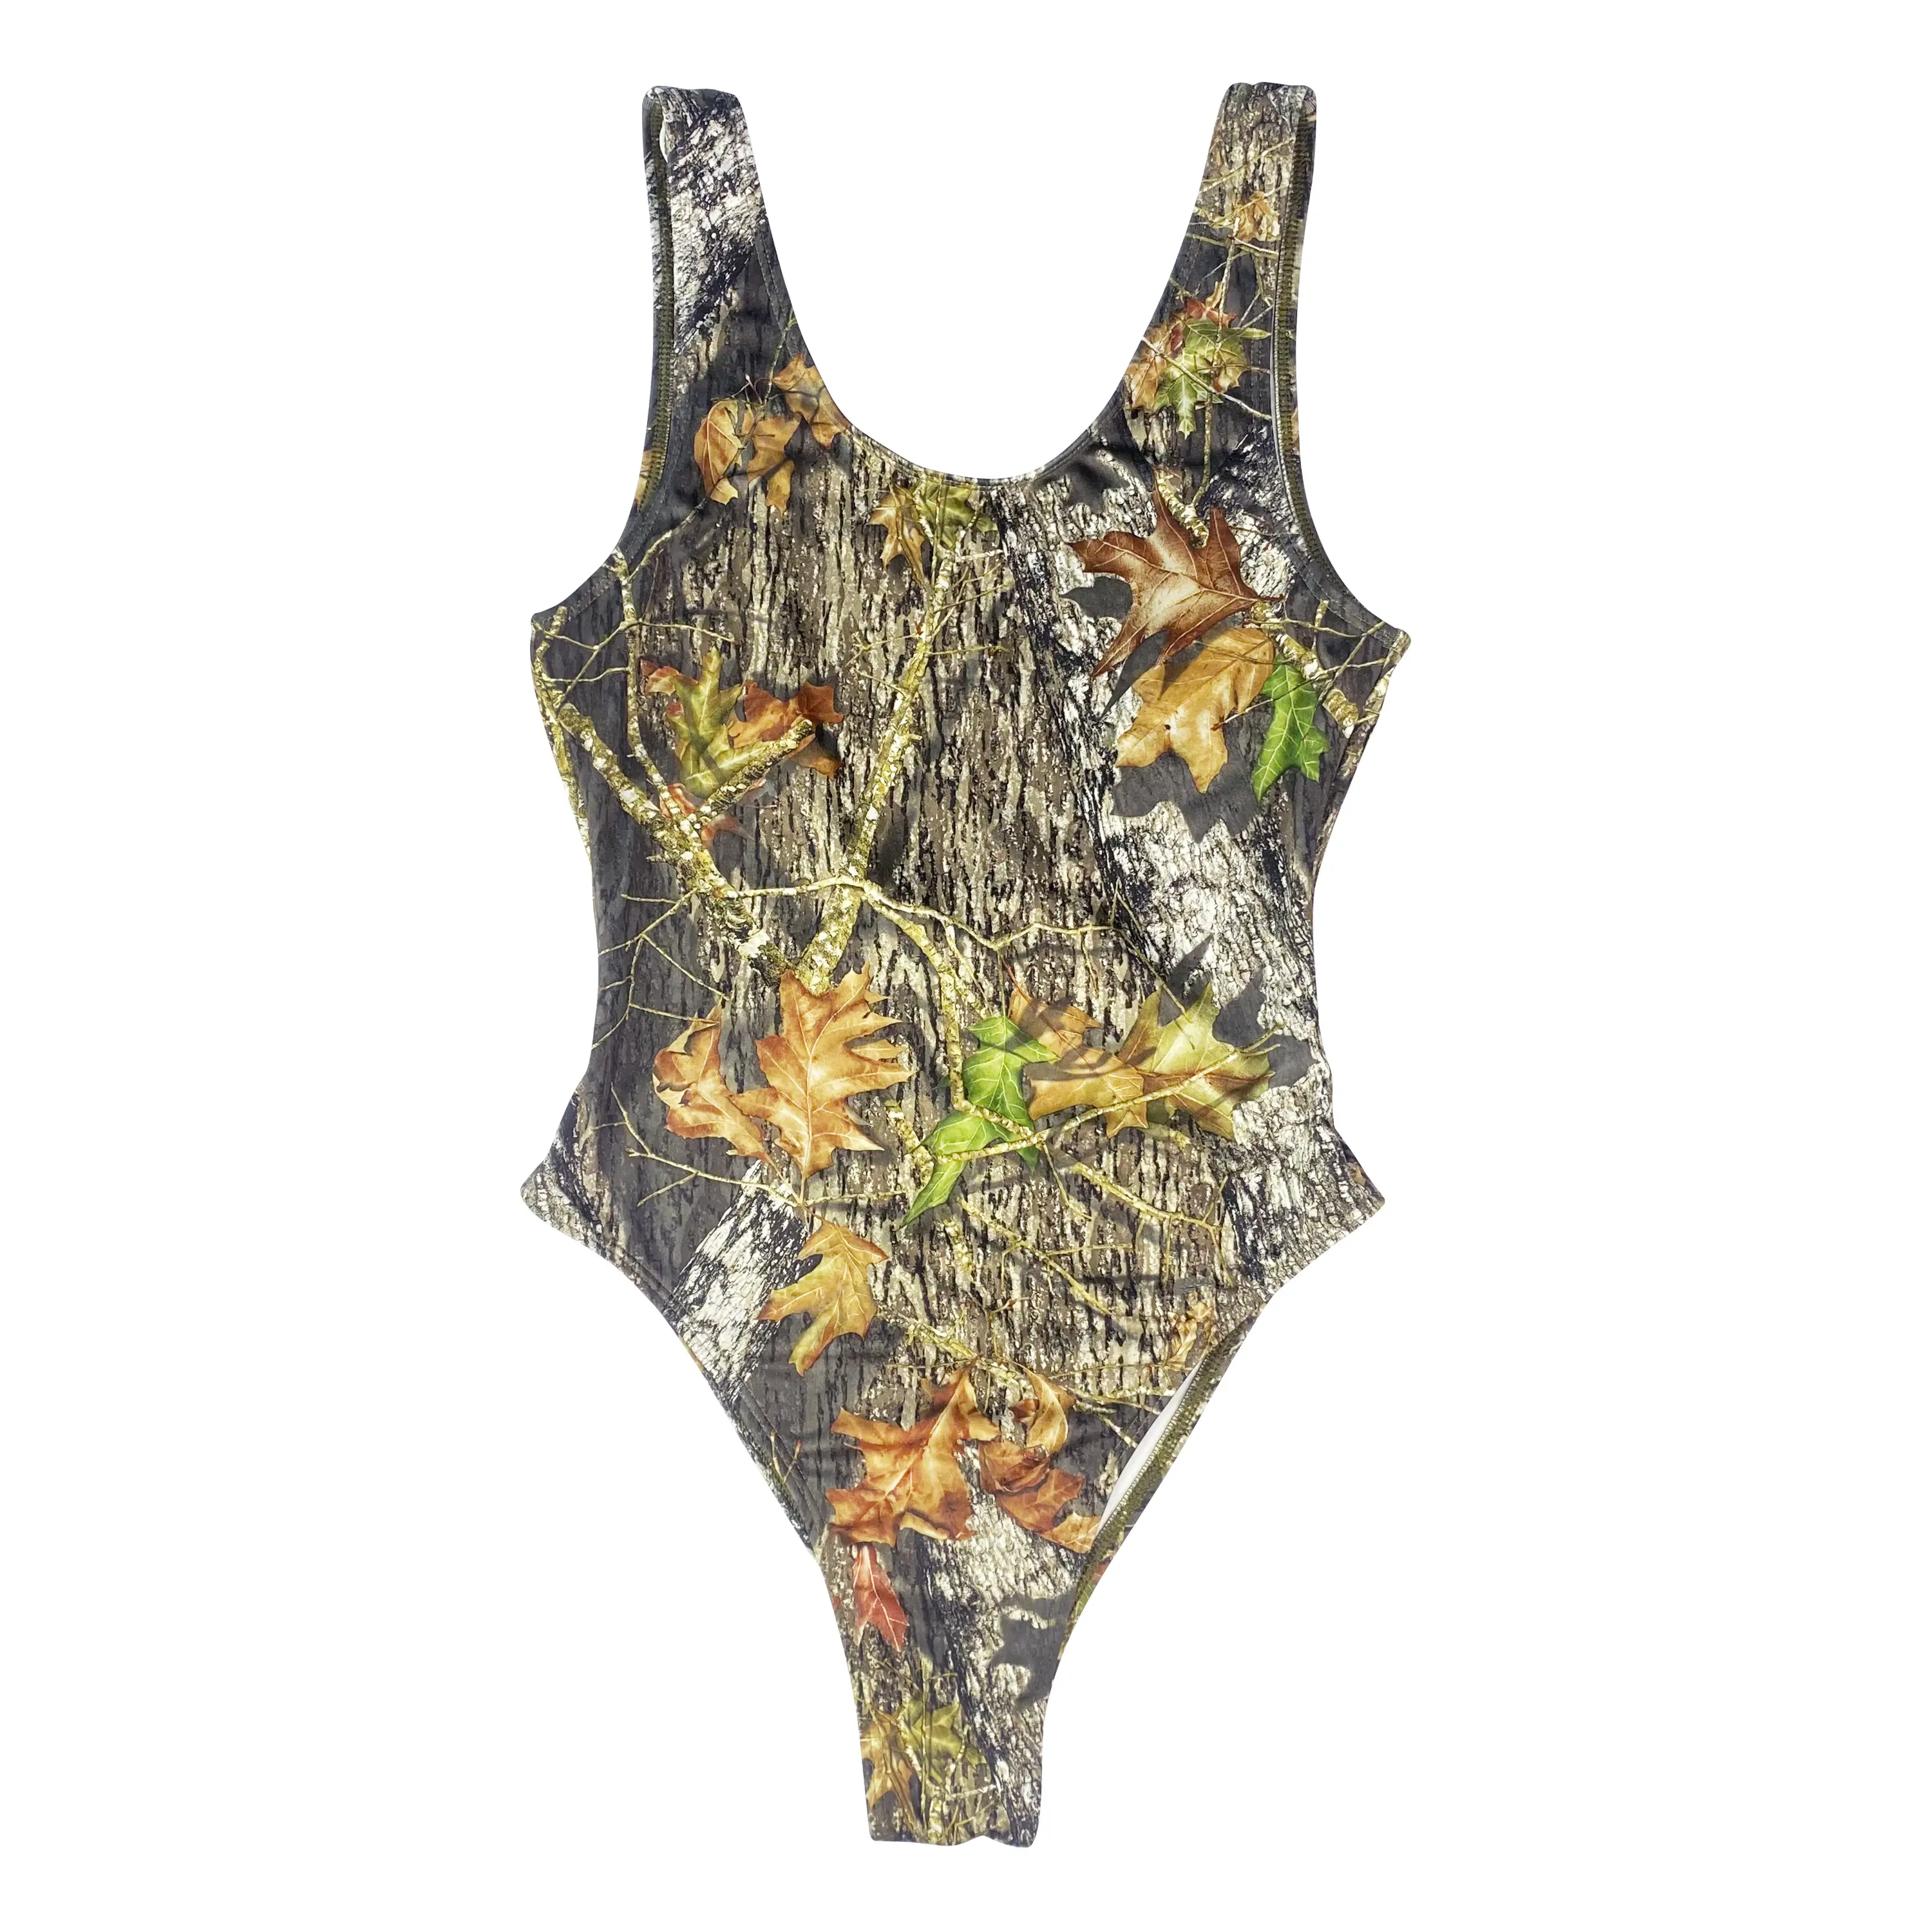 Jonathan Swim Custom Tree Military Green Camouflage One Piece Bikini For Women Swimwear